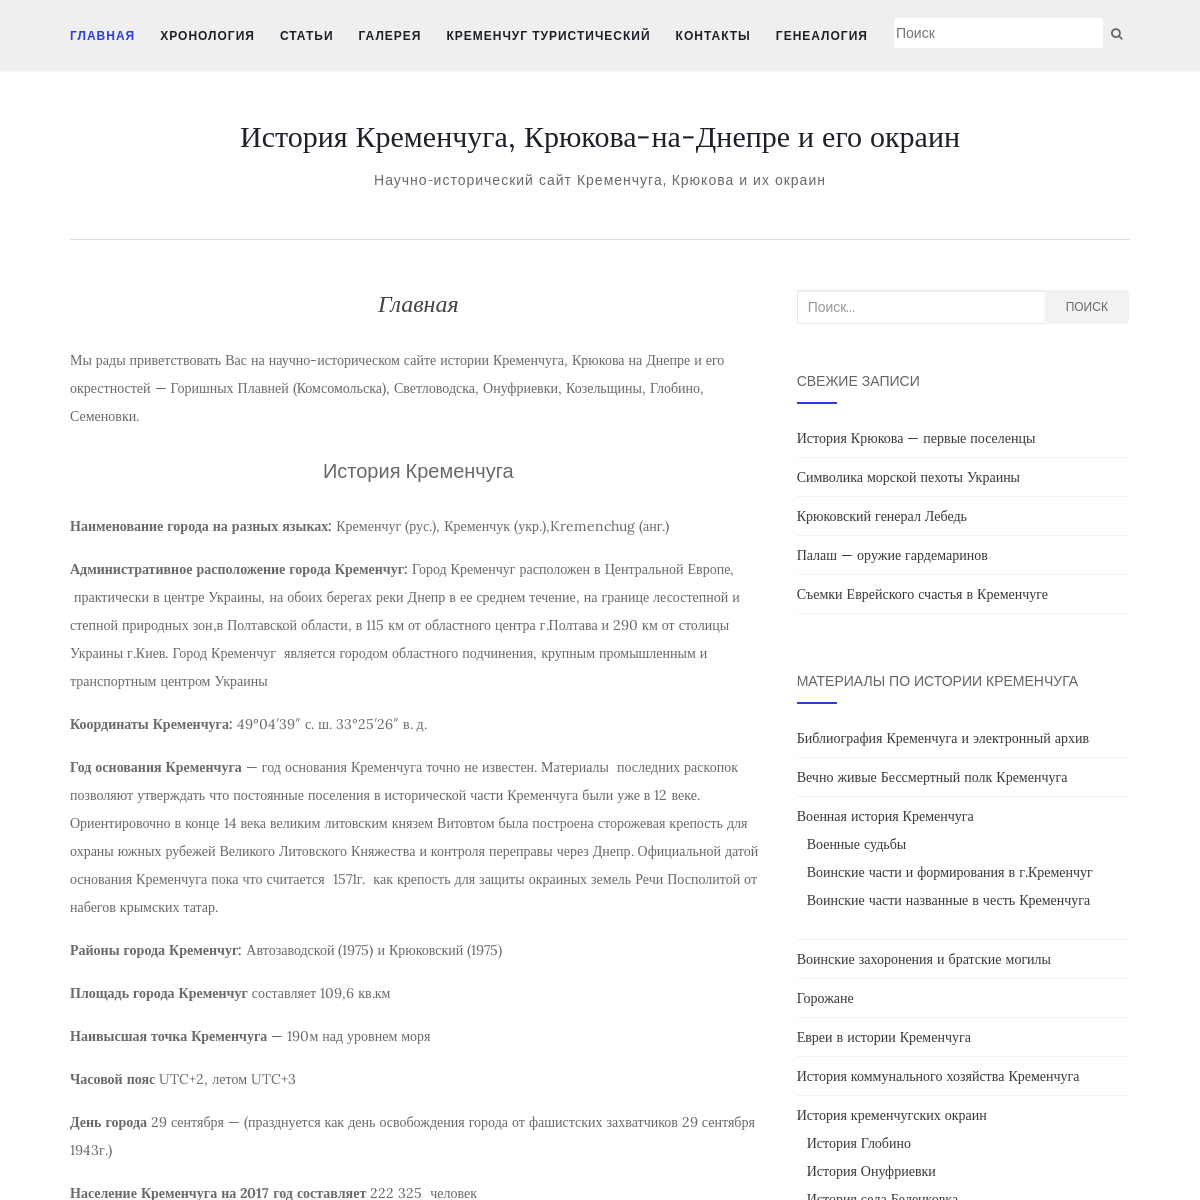 A complete backup of kremenhistory.org.ua